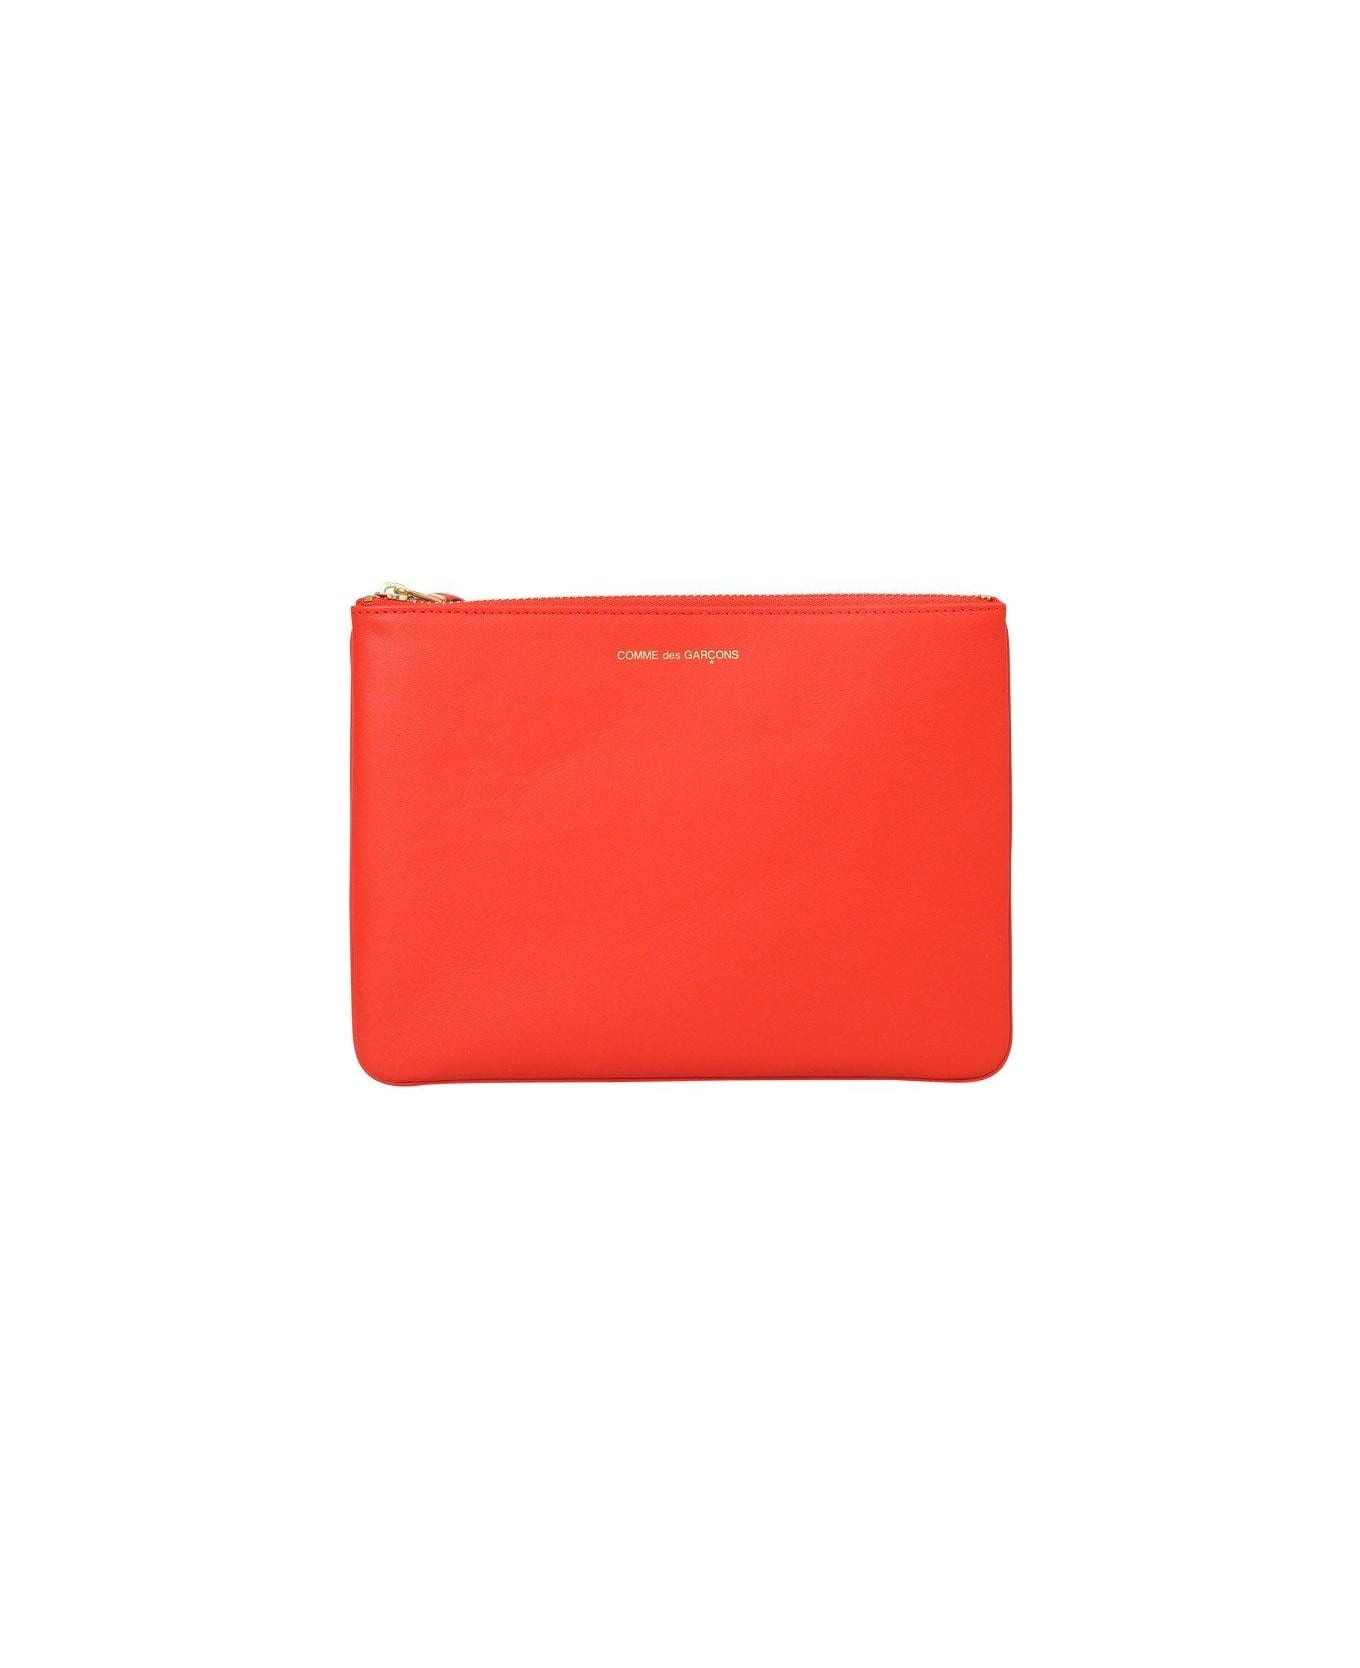 Comme des Garçons Wallet Logo Detailed Classic Wallet - Oran Orange